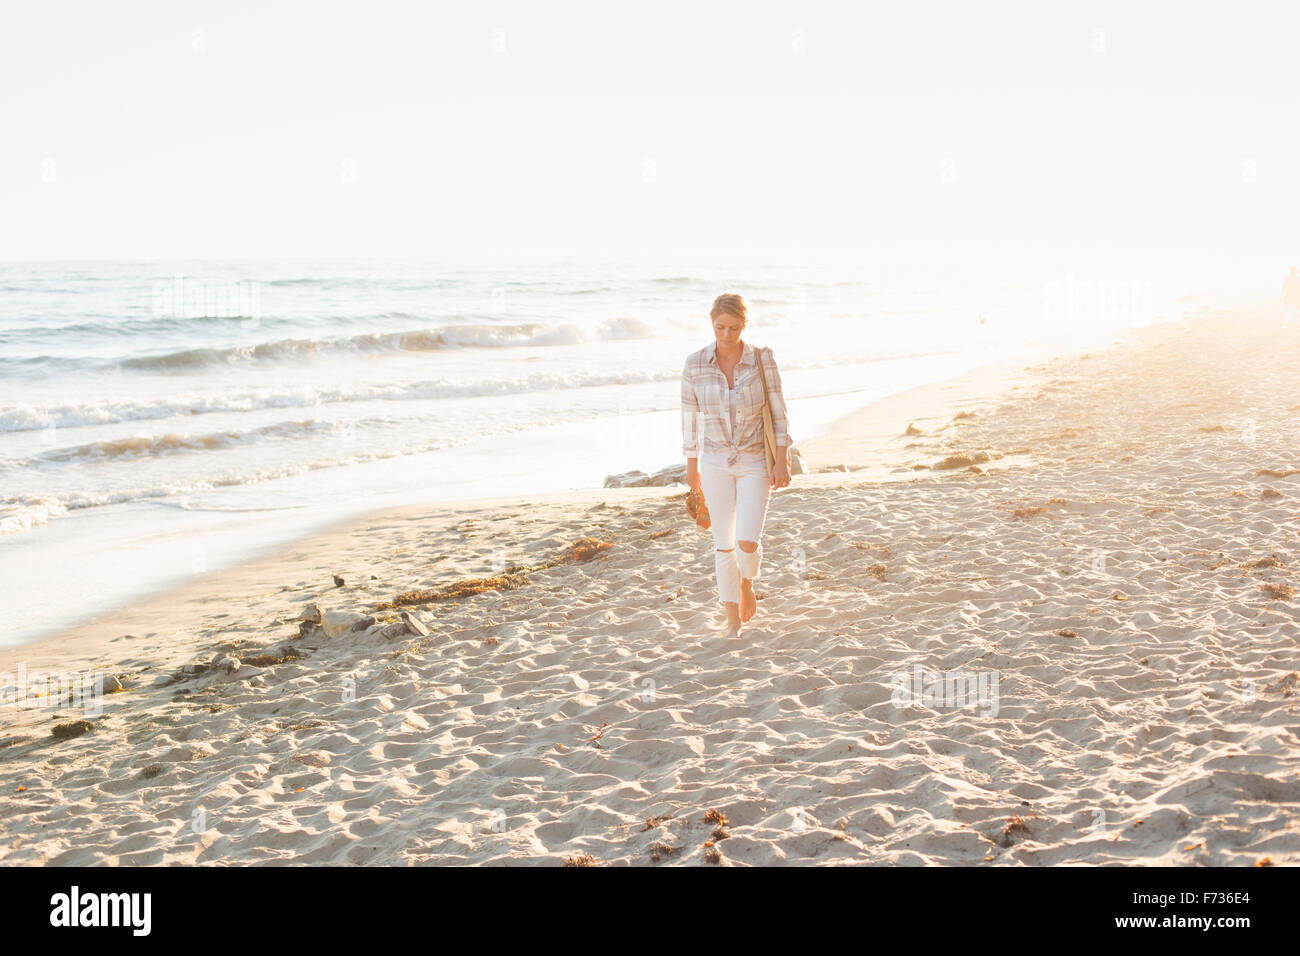 Woman walking along a sandy beach by the ocean. Stock Photo